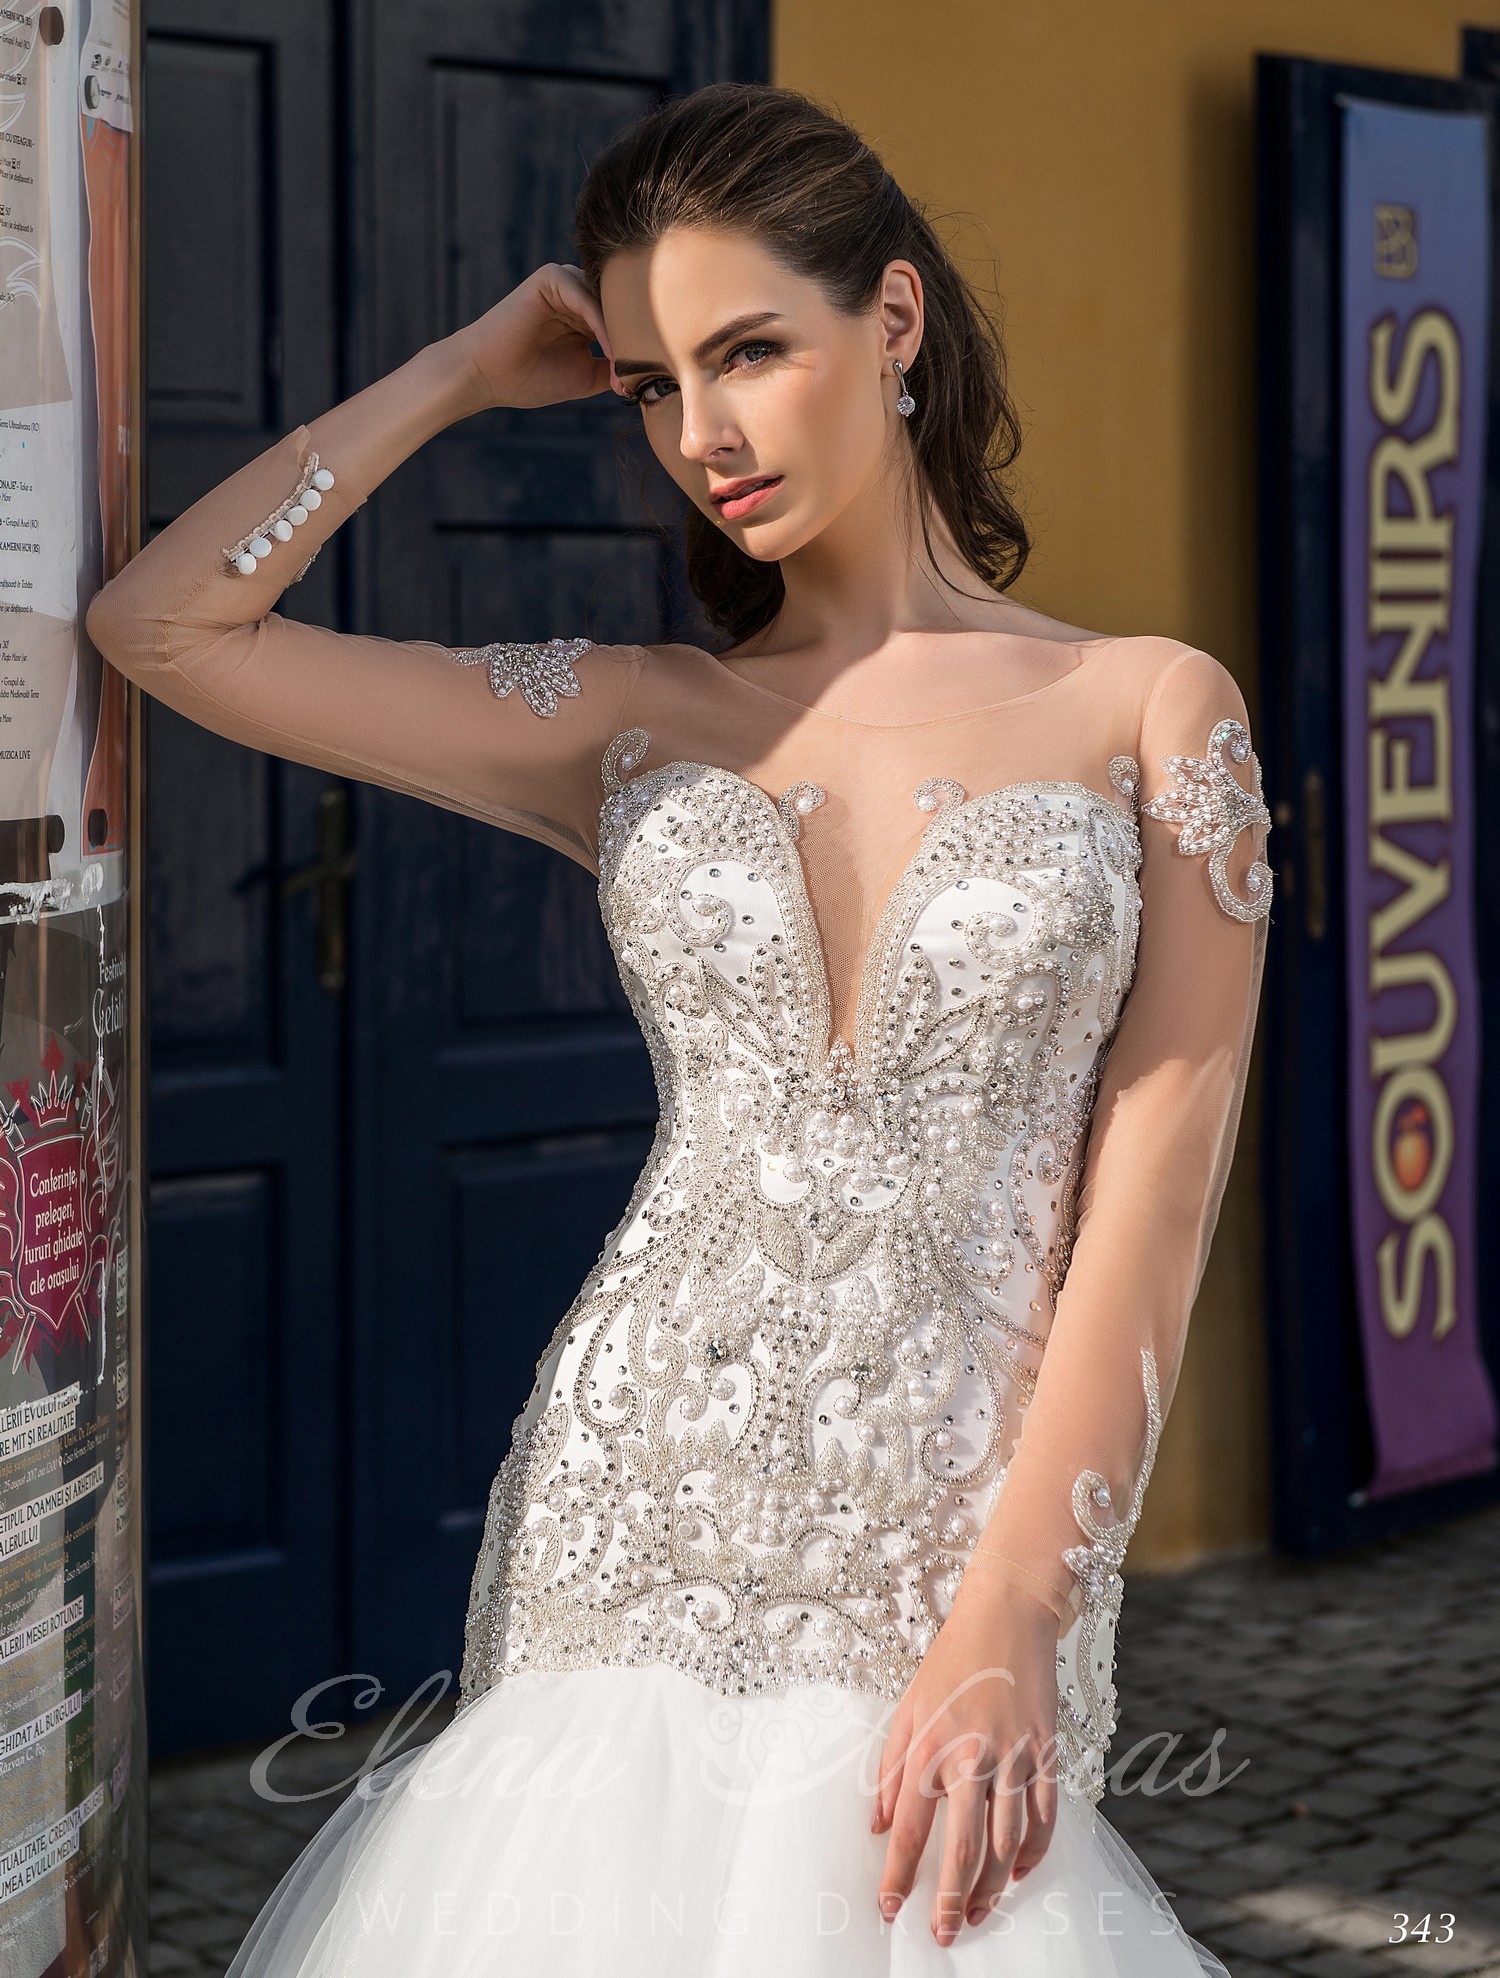 Wedding dress style "fish" wholesale from Elena Novias